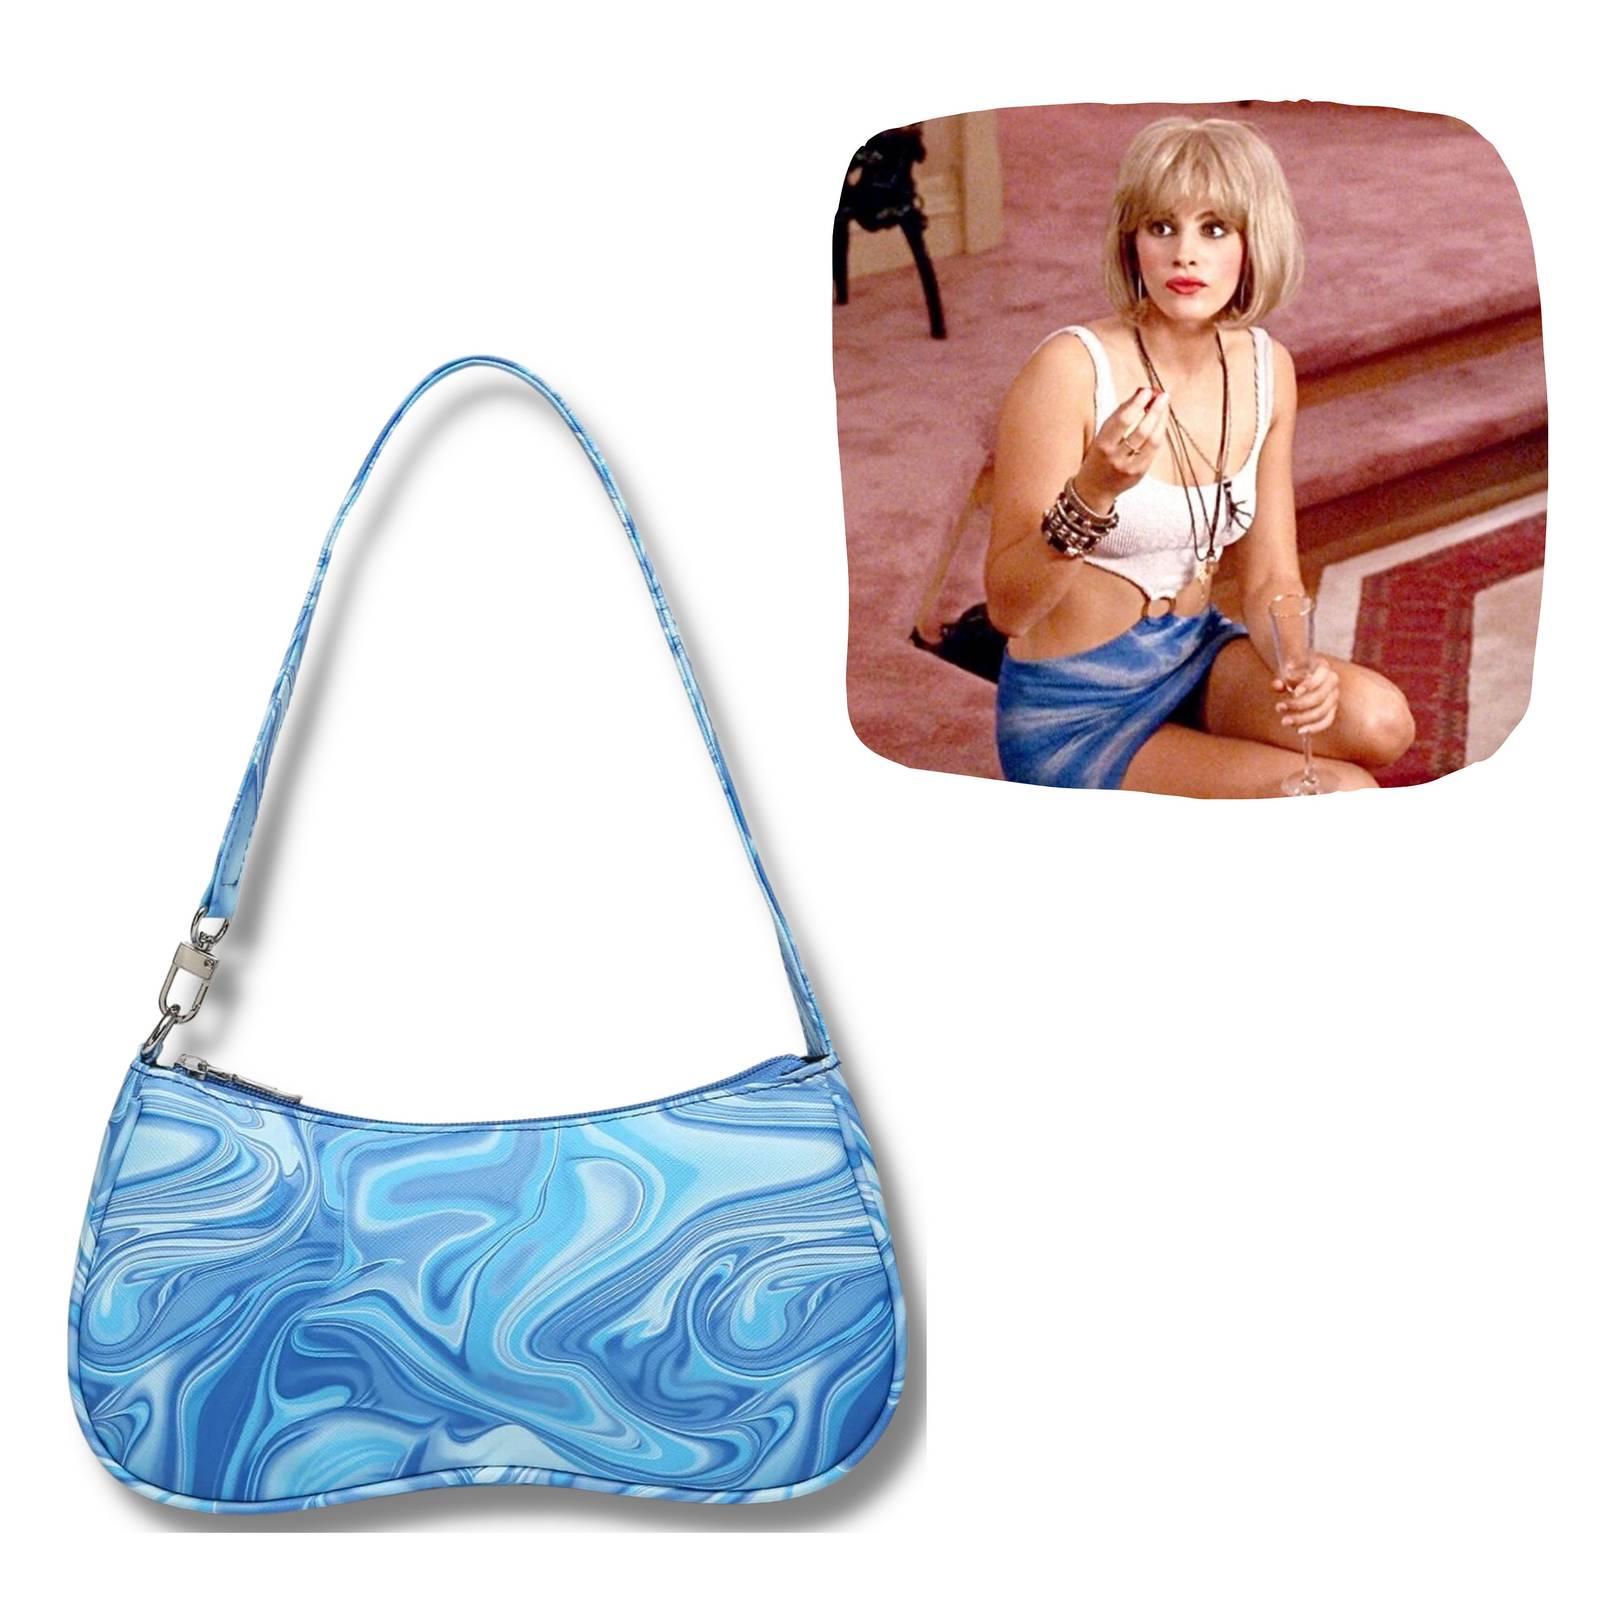 Pretty woman movie inspired purse blue marble handbag 80s 90s Fancy dress movie